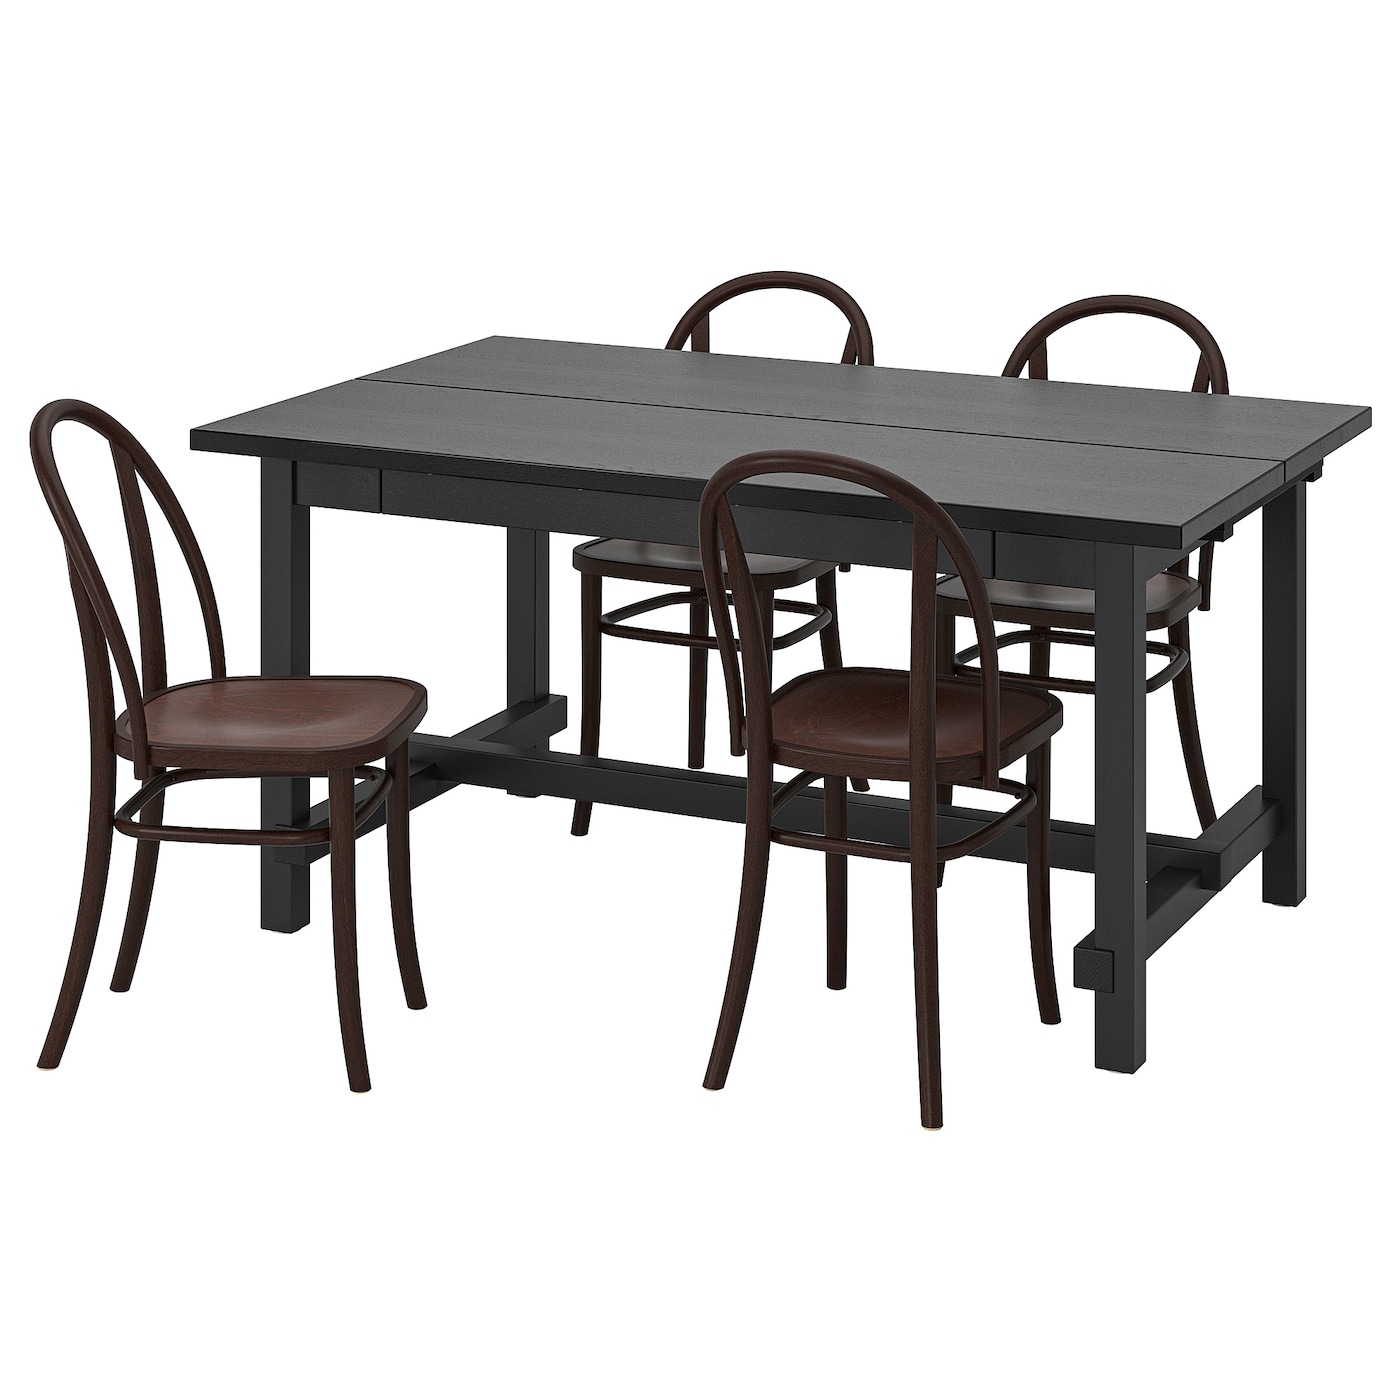 Стол и 4 стула - NORDVIKEN / SKOGSBO IKEA/ НОРДВИКЕН /СКОГСБО ИКЕА, 223х95х75 см, черный/коричневый